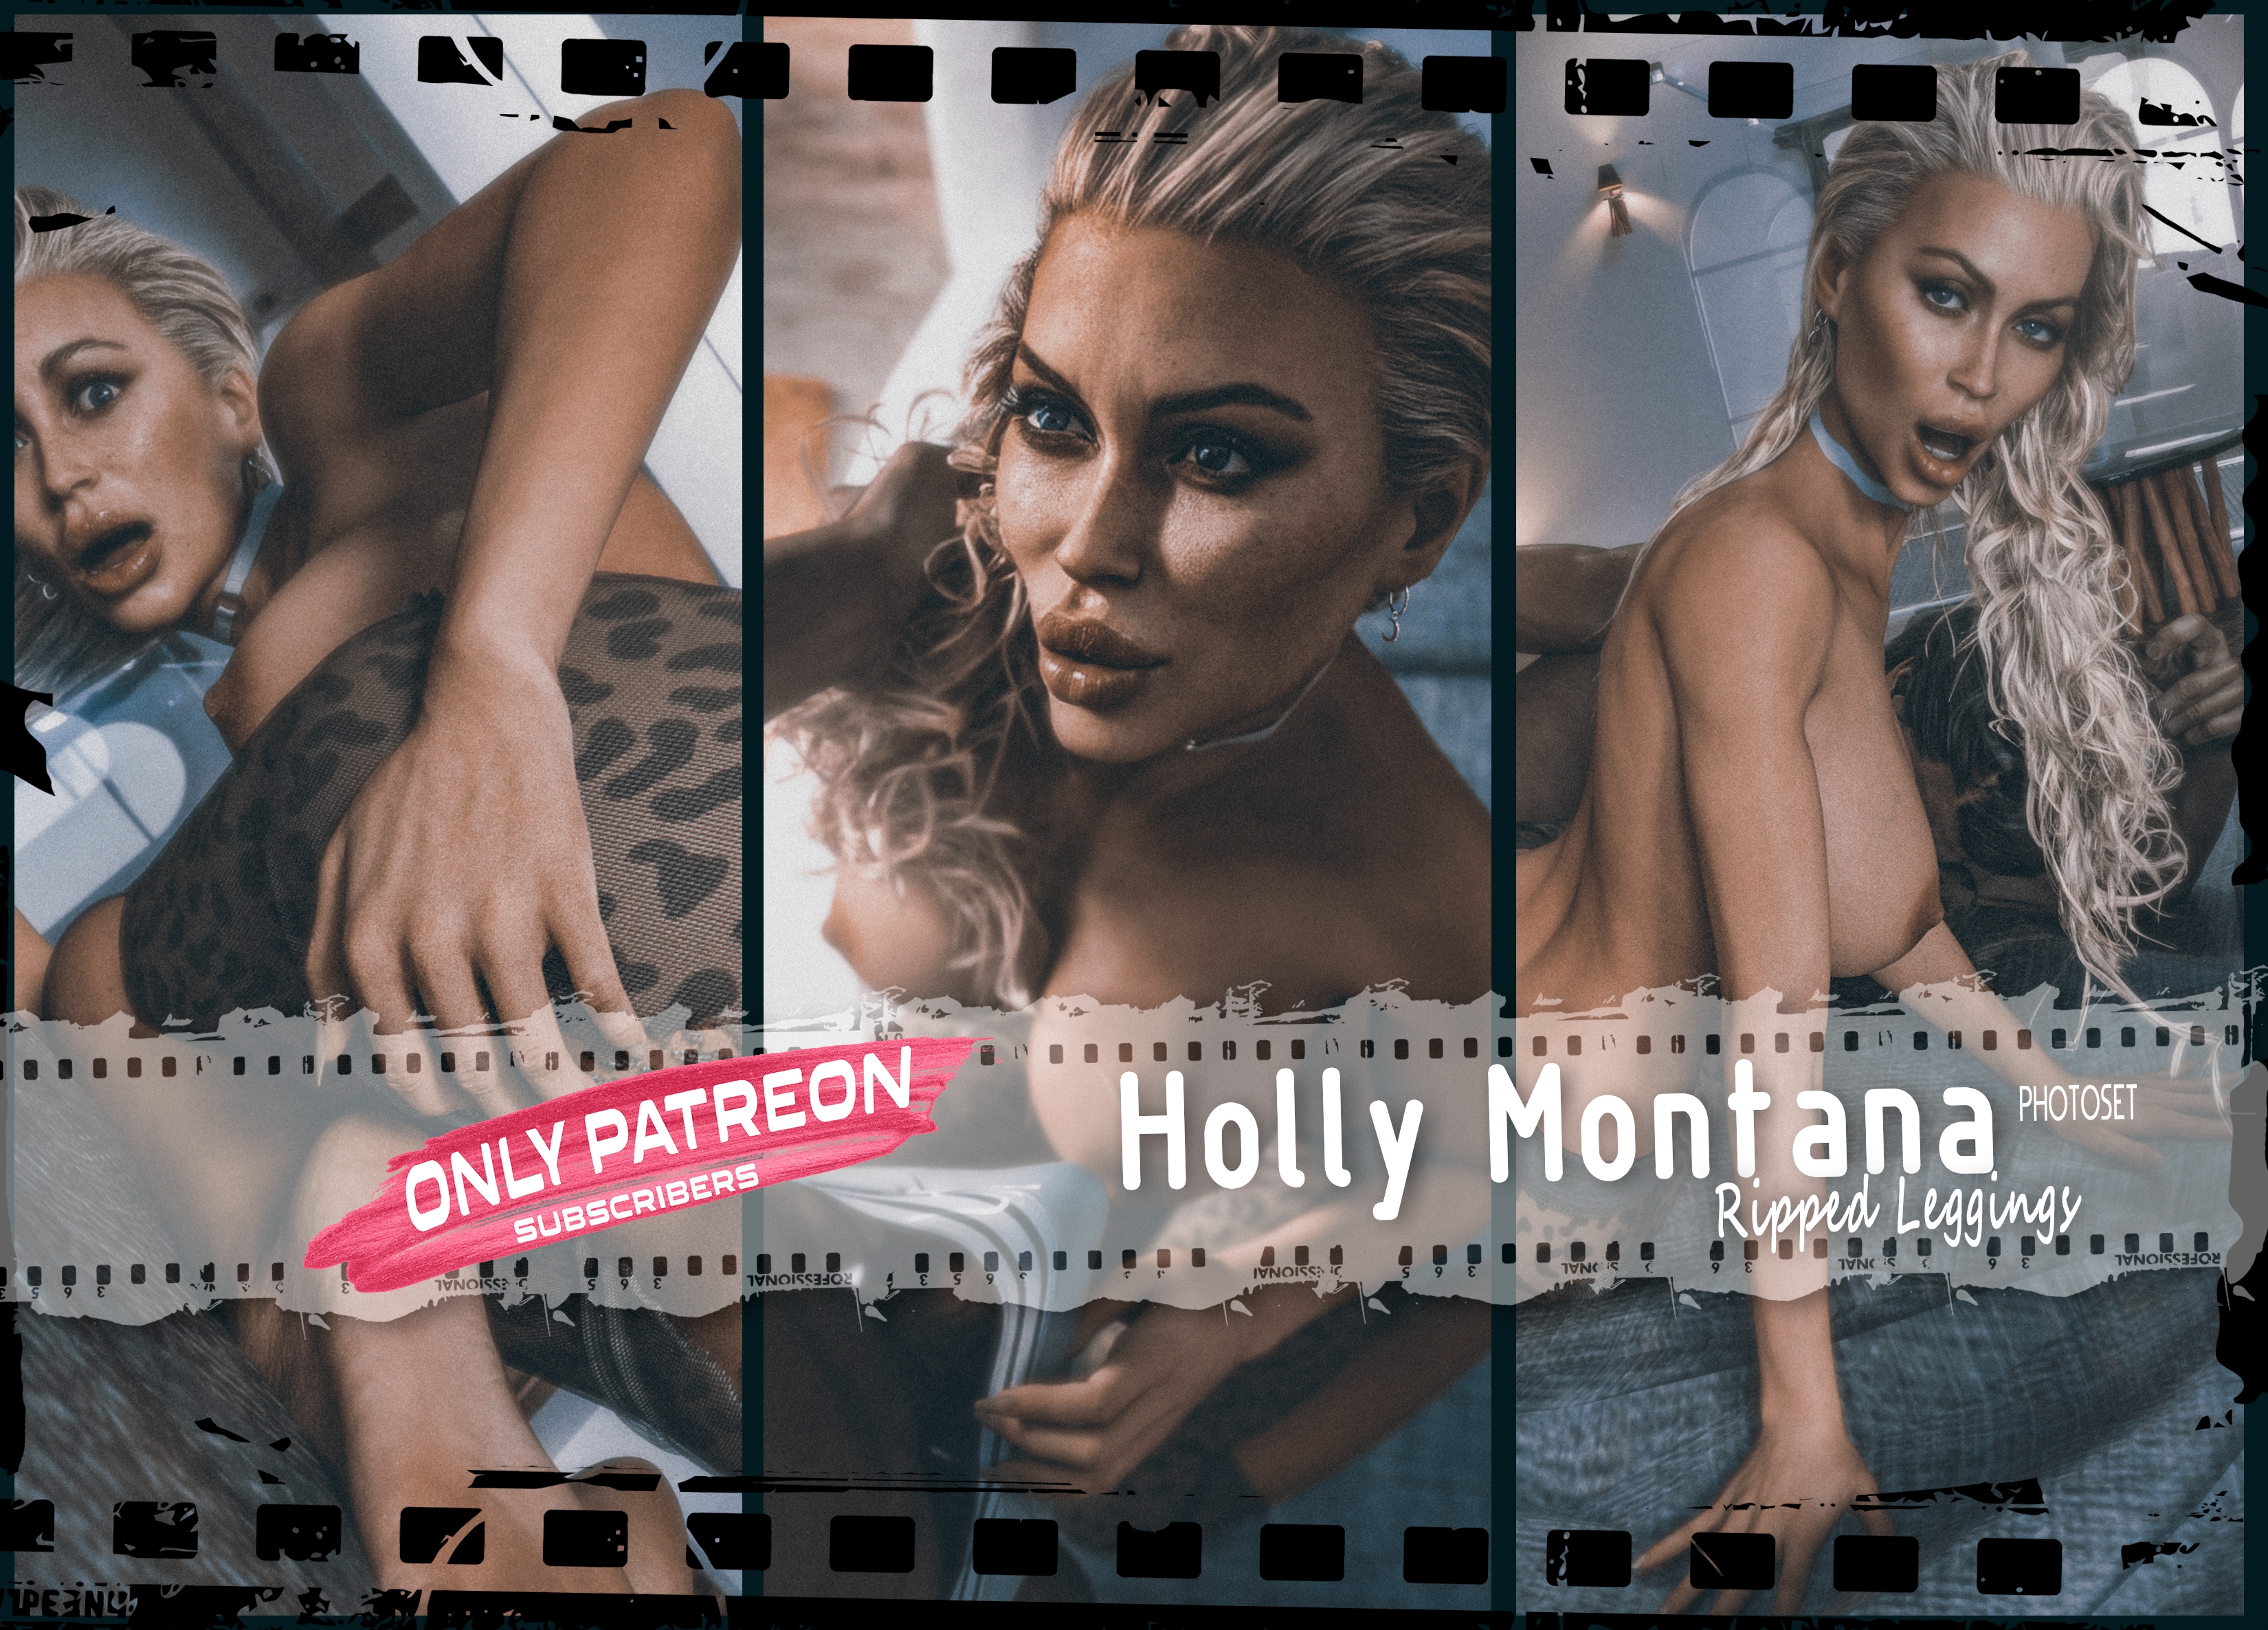 Holly Montana - Ripped Leggings [Photoset]